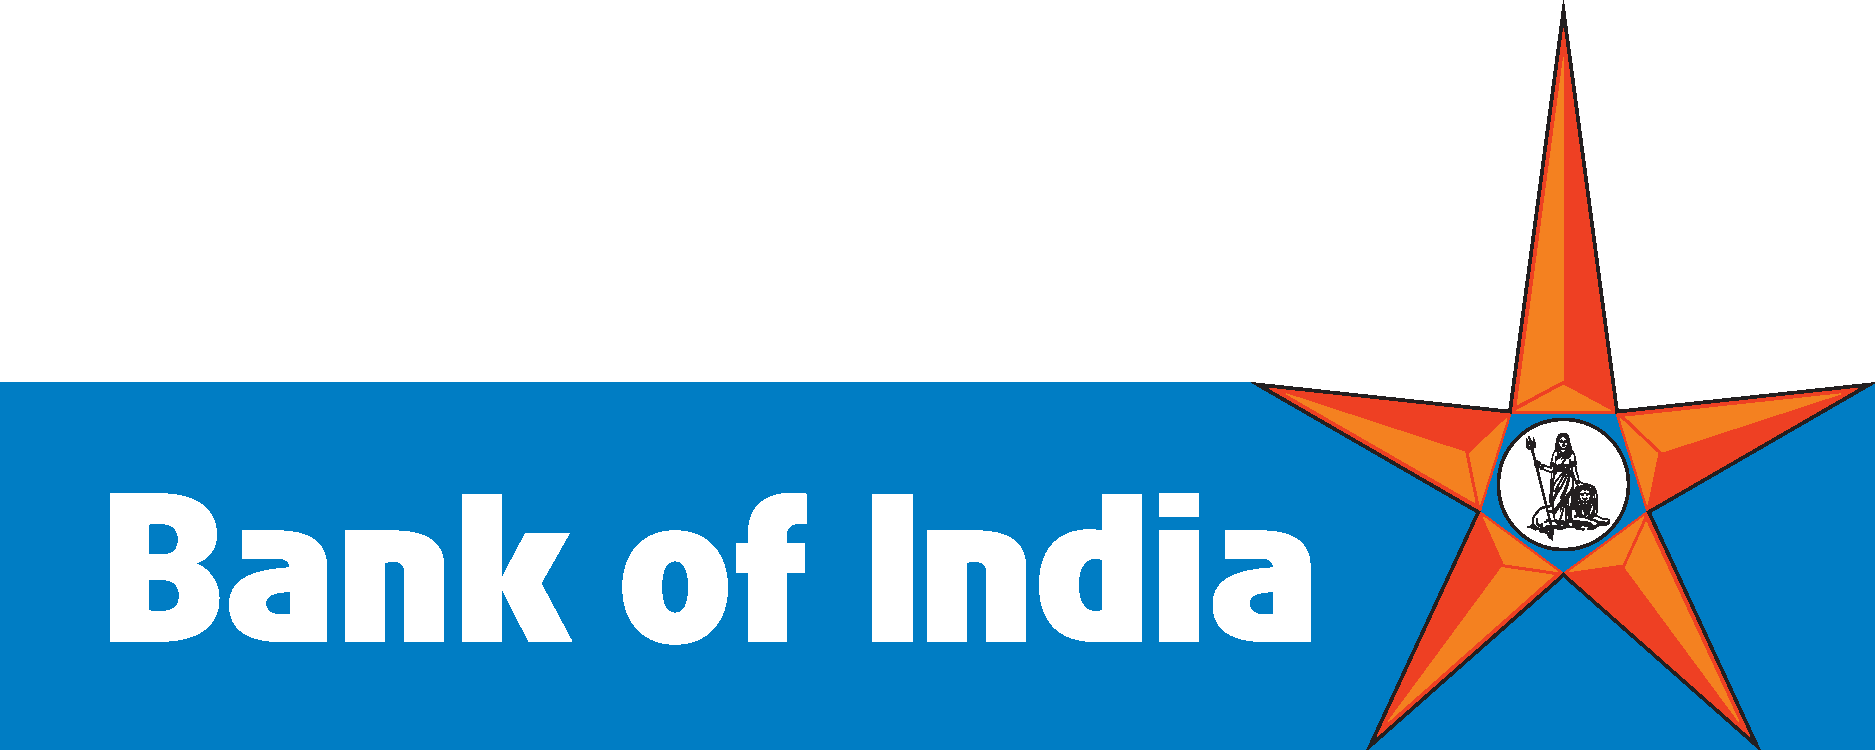 BOI Bank of India Logo logo, Vector Logo of BOI Bank of India Logo brand  free download (eps, ai, png, cdr) formats